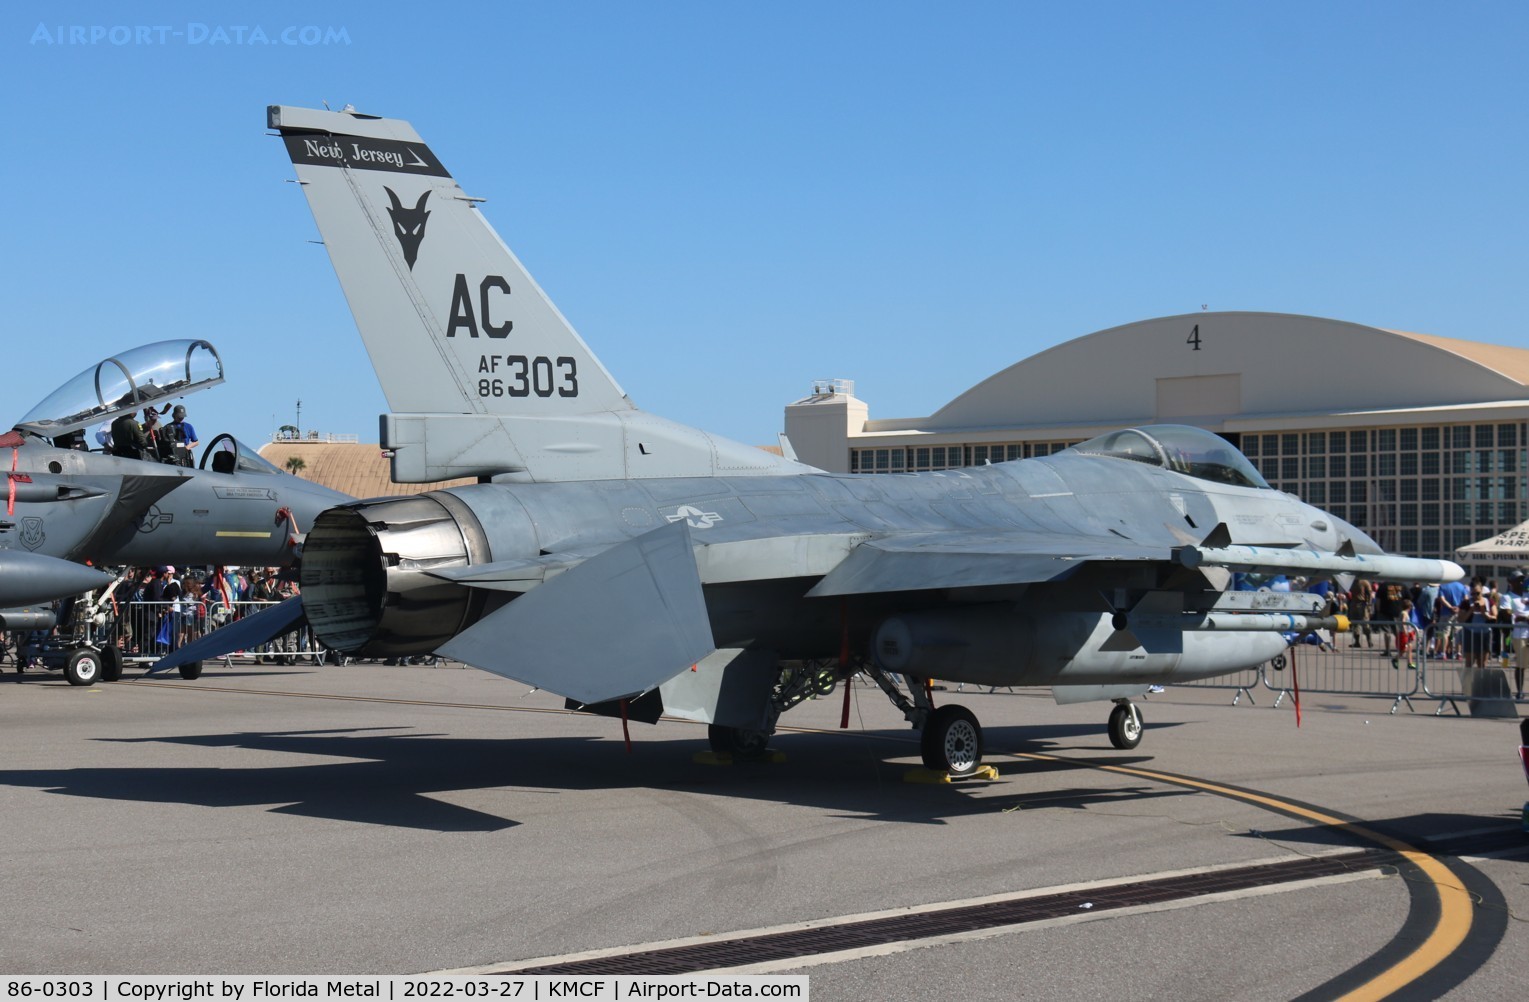 86-0303, General Dynamics F-16C Fighting Falcon C/N 5C-409, F-16C zx